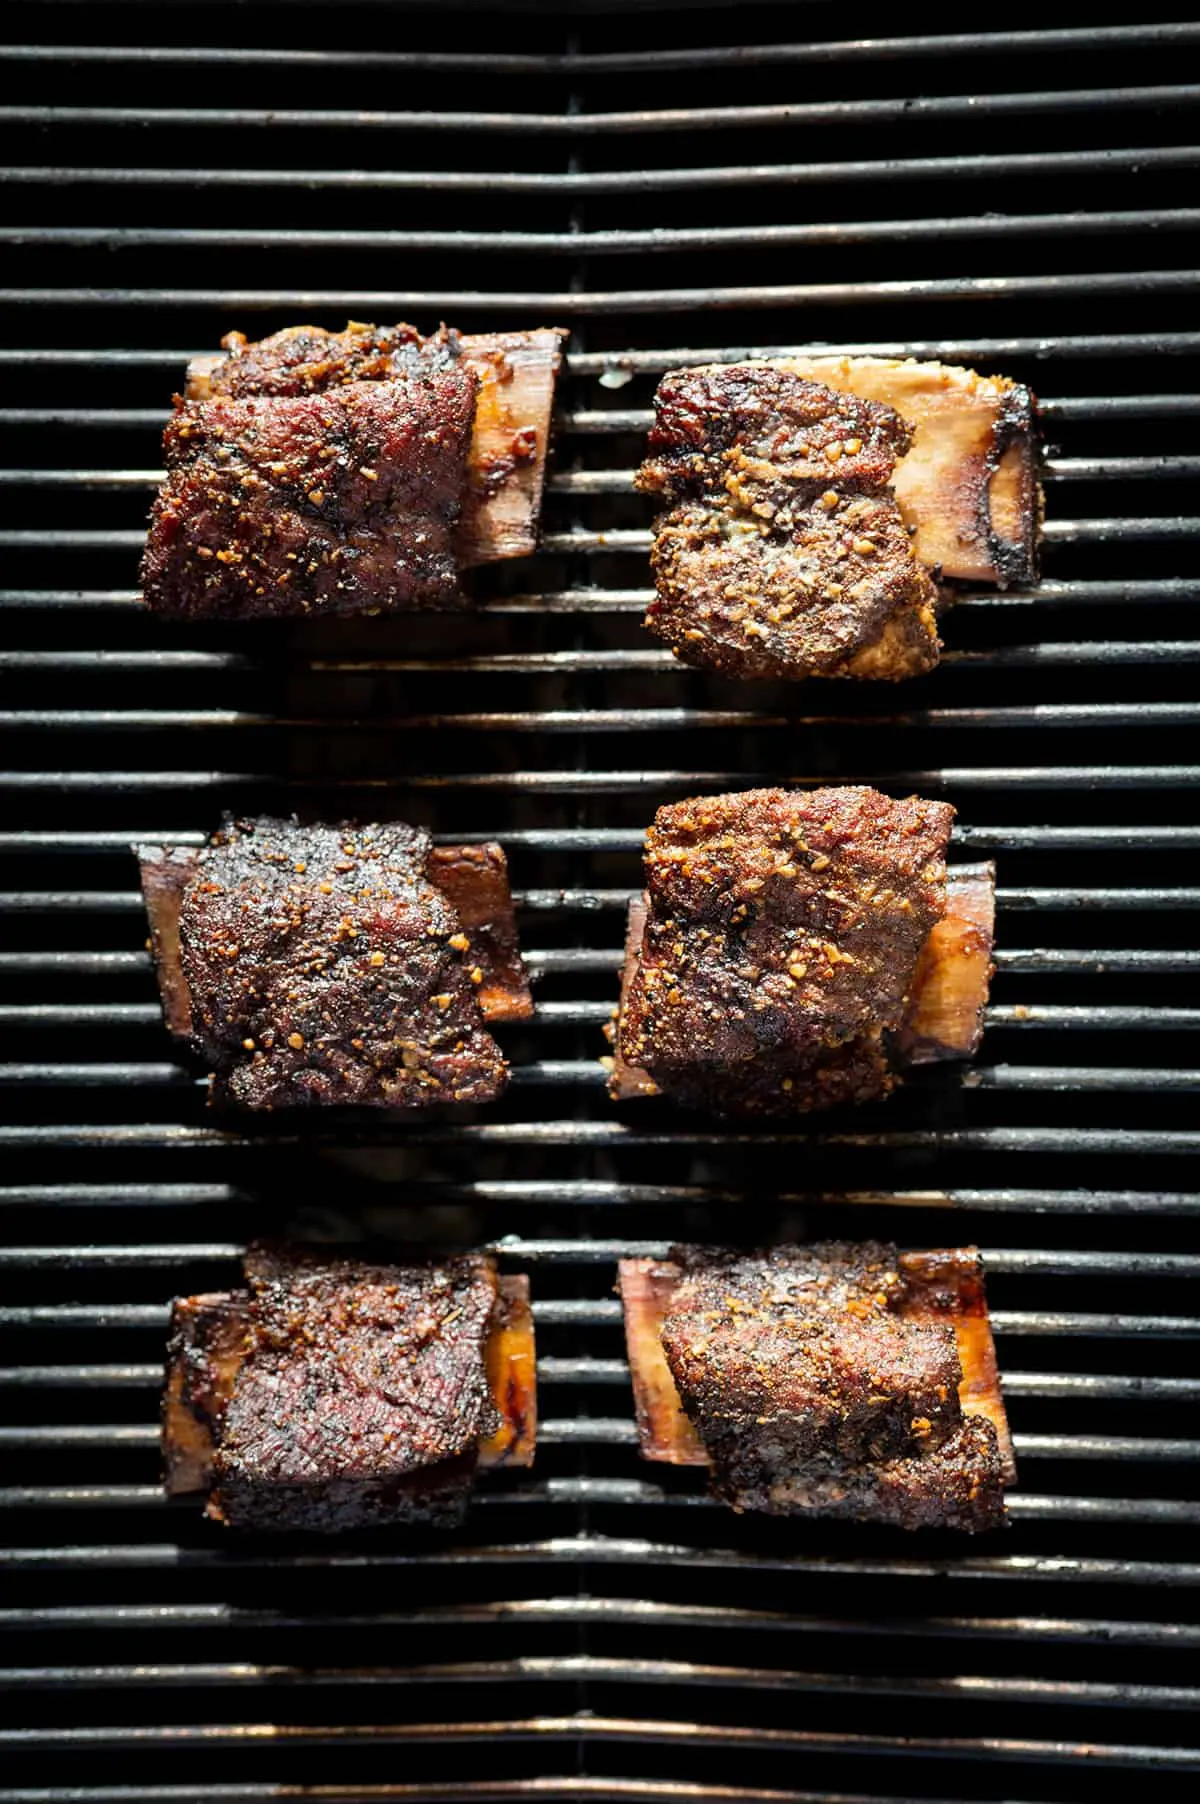 smoked beef chuck ribs - Are beef chuck ribs good